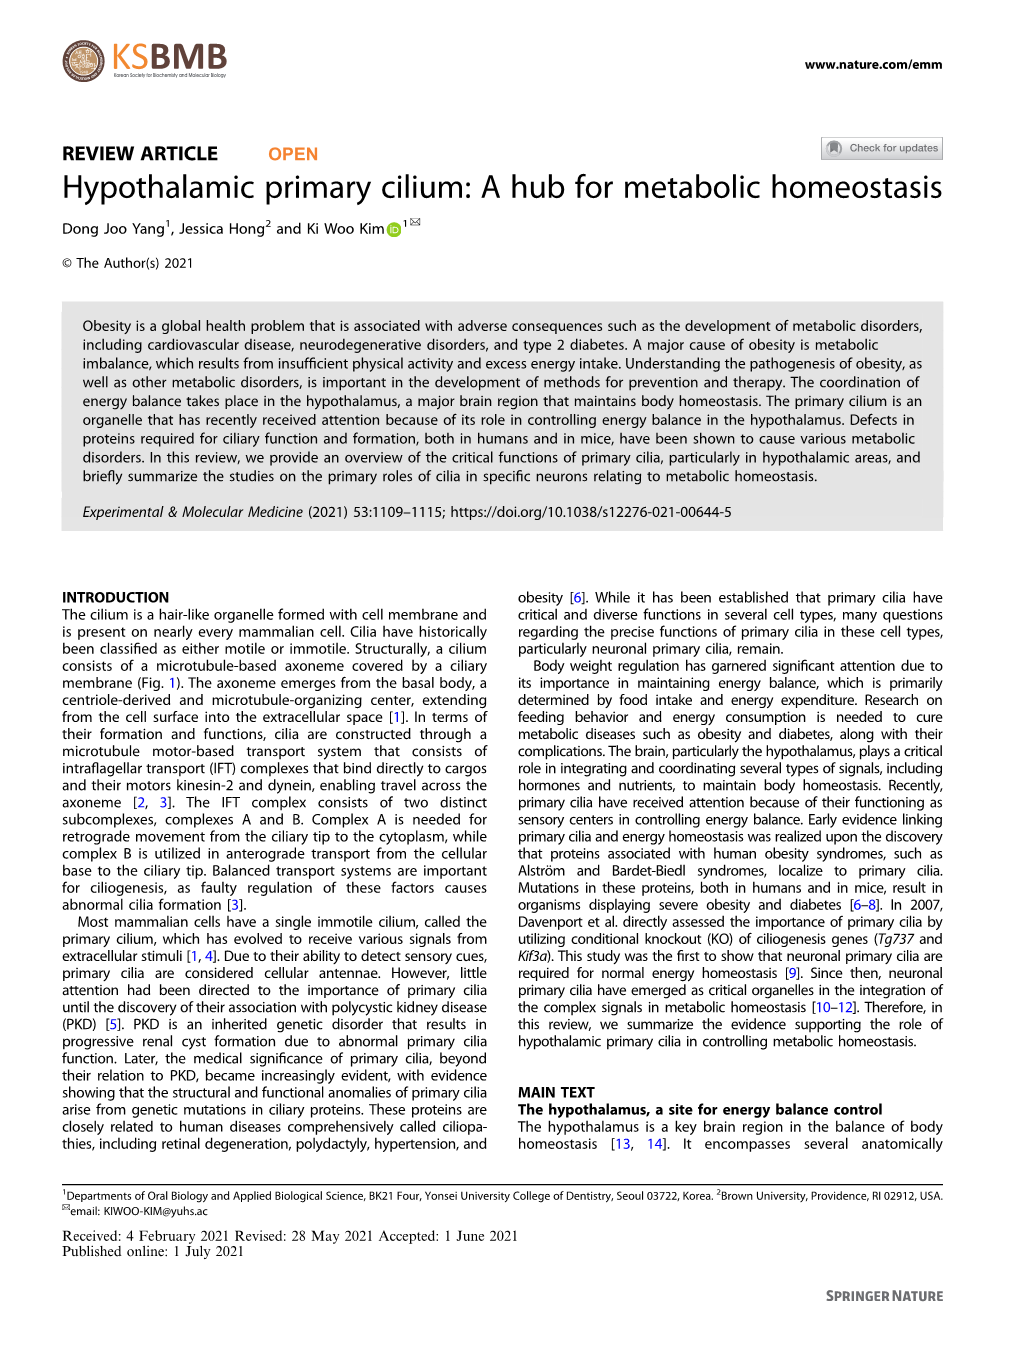 Hypothalamic Primary Cilium: a Hub for Metabolic Homeostasis ✉ Dong Joo Yang1, Jessica Hong2 and Ki Woo Kim 1